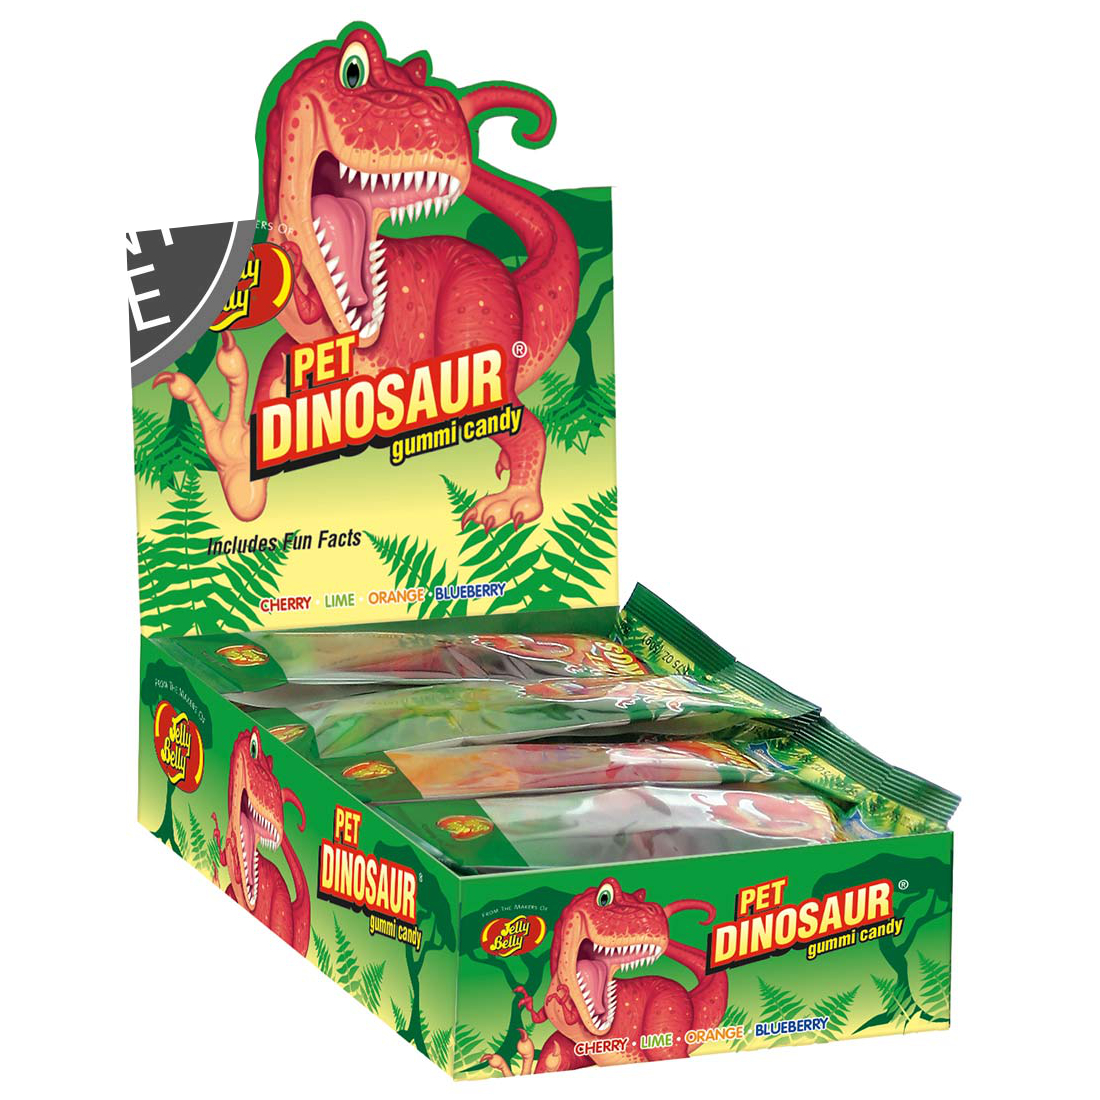   :  (Pet Dinosaur), 49  (Jelly Belly 5228)